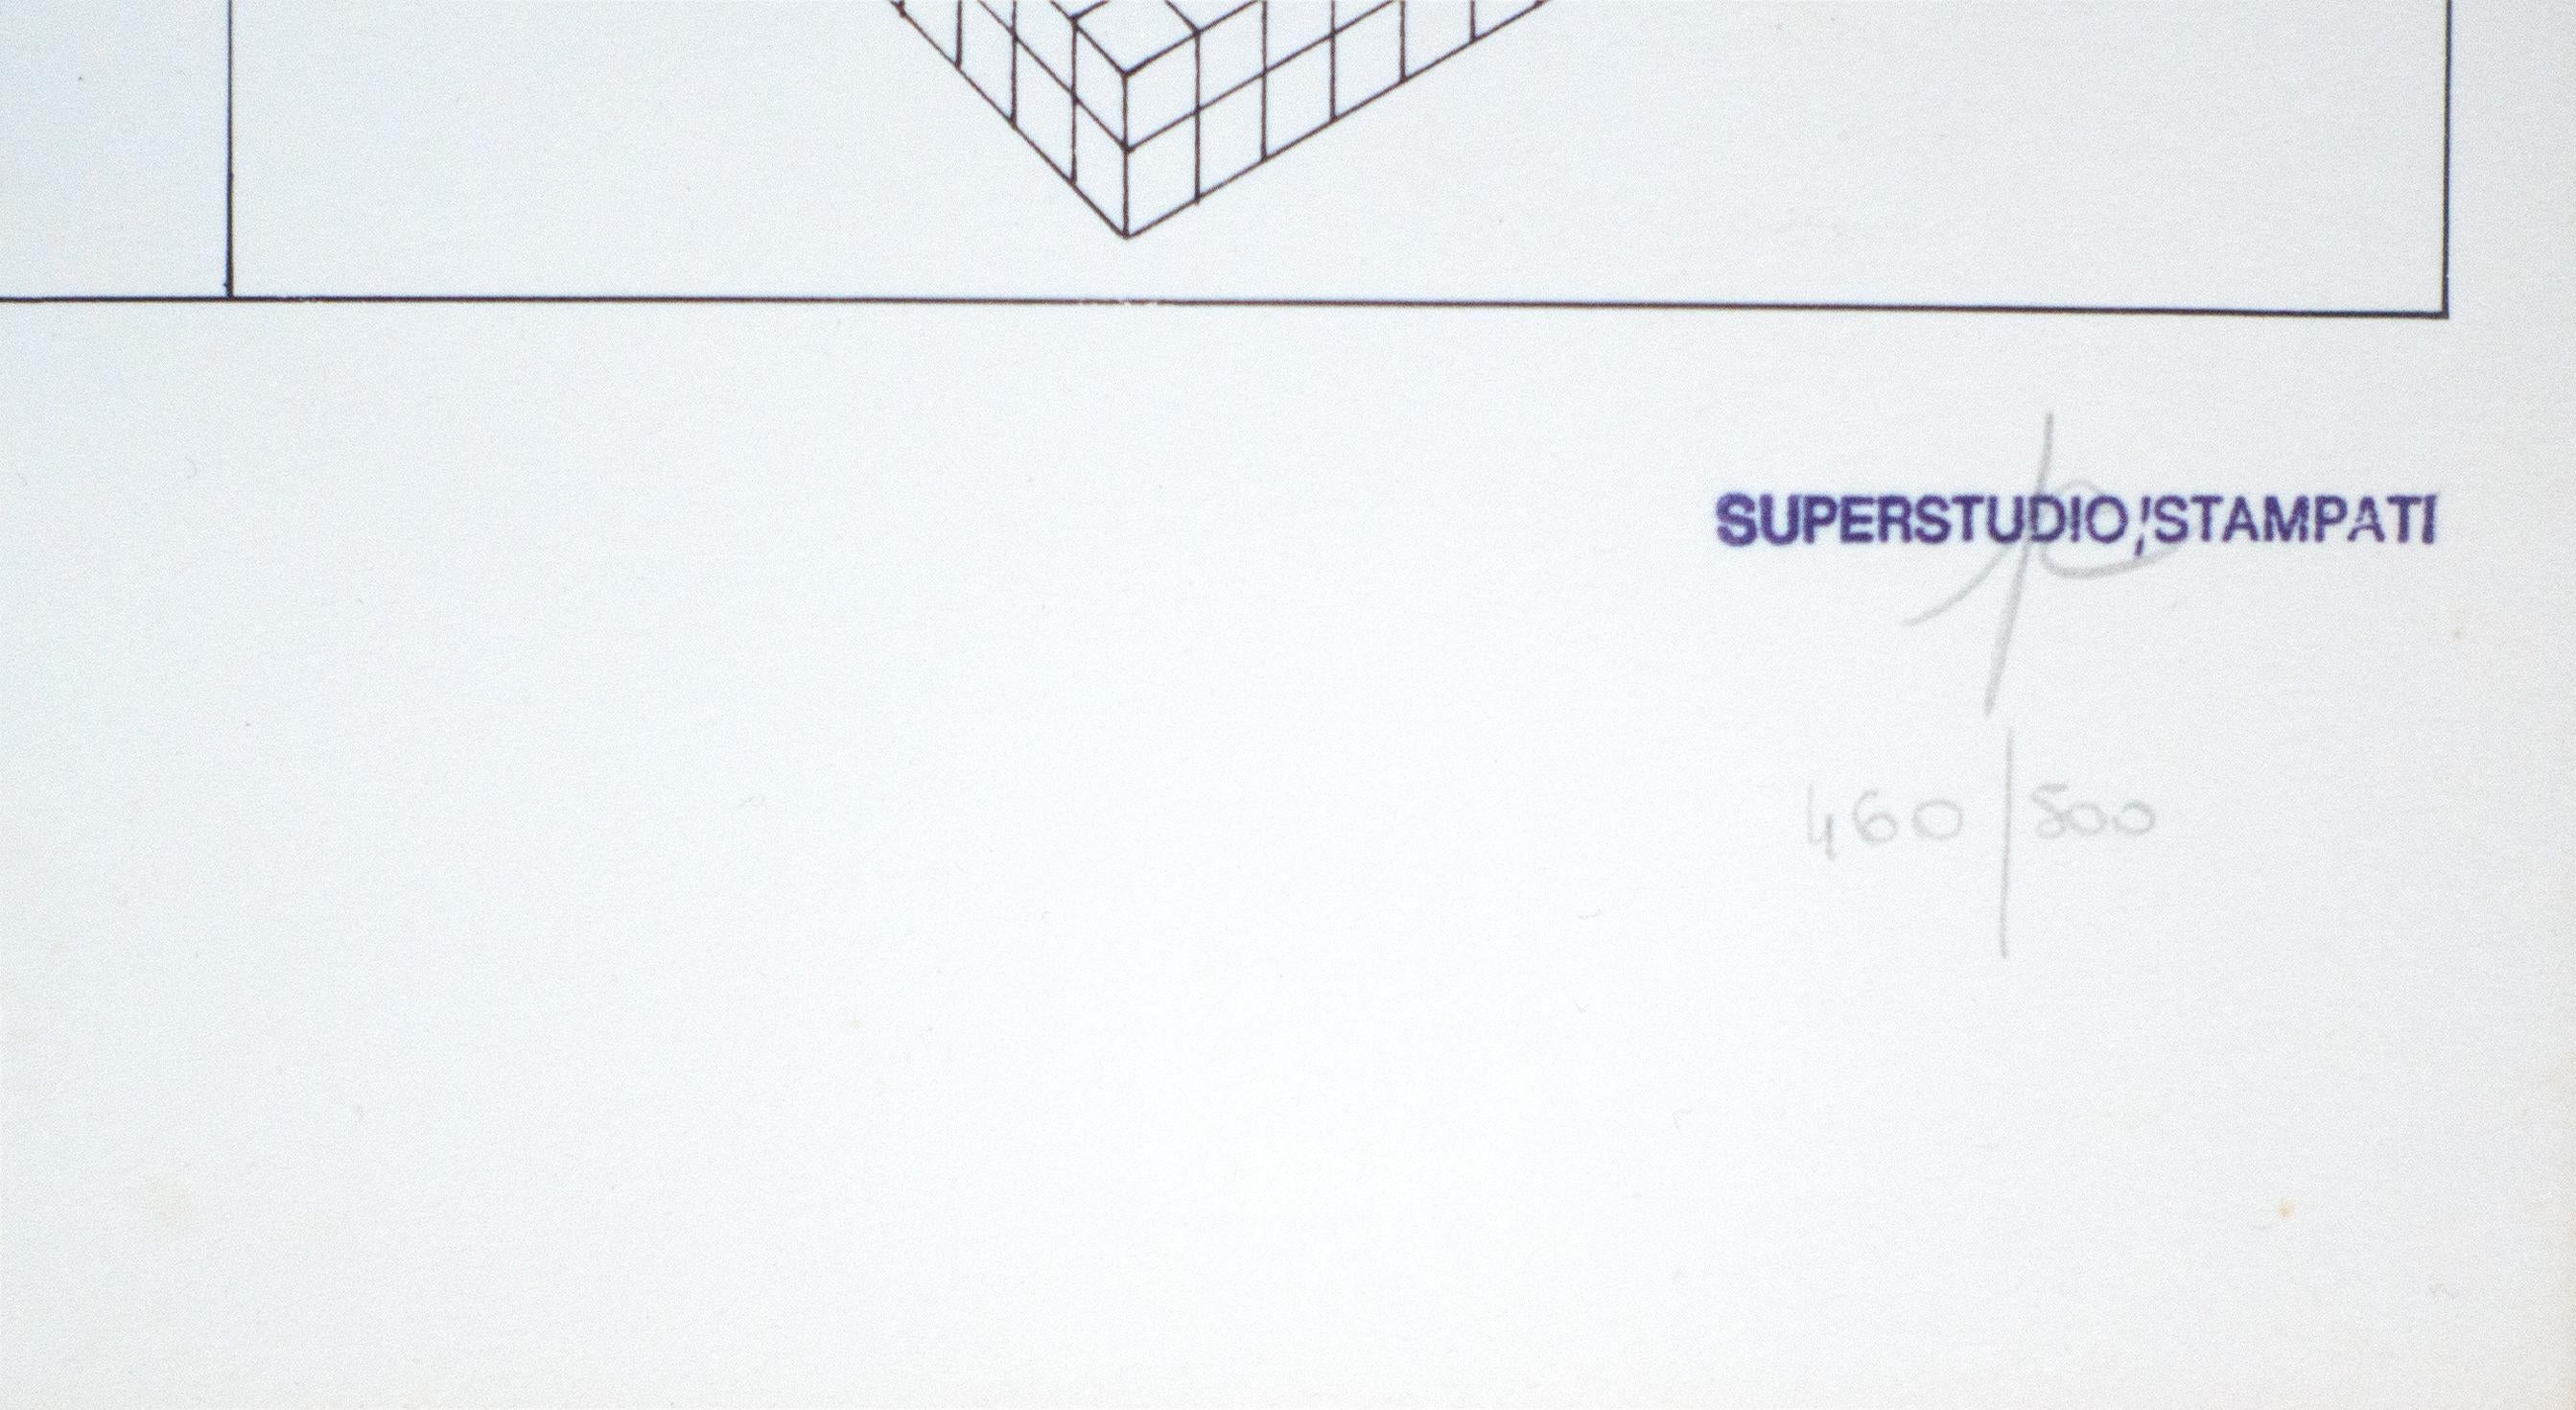  Istogrammi, Superstudio, architecture radicale, sérigraphie sur papier en vente 2